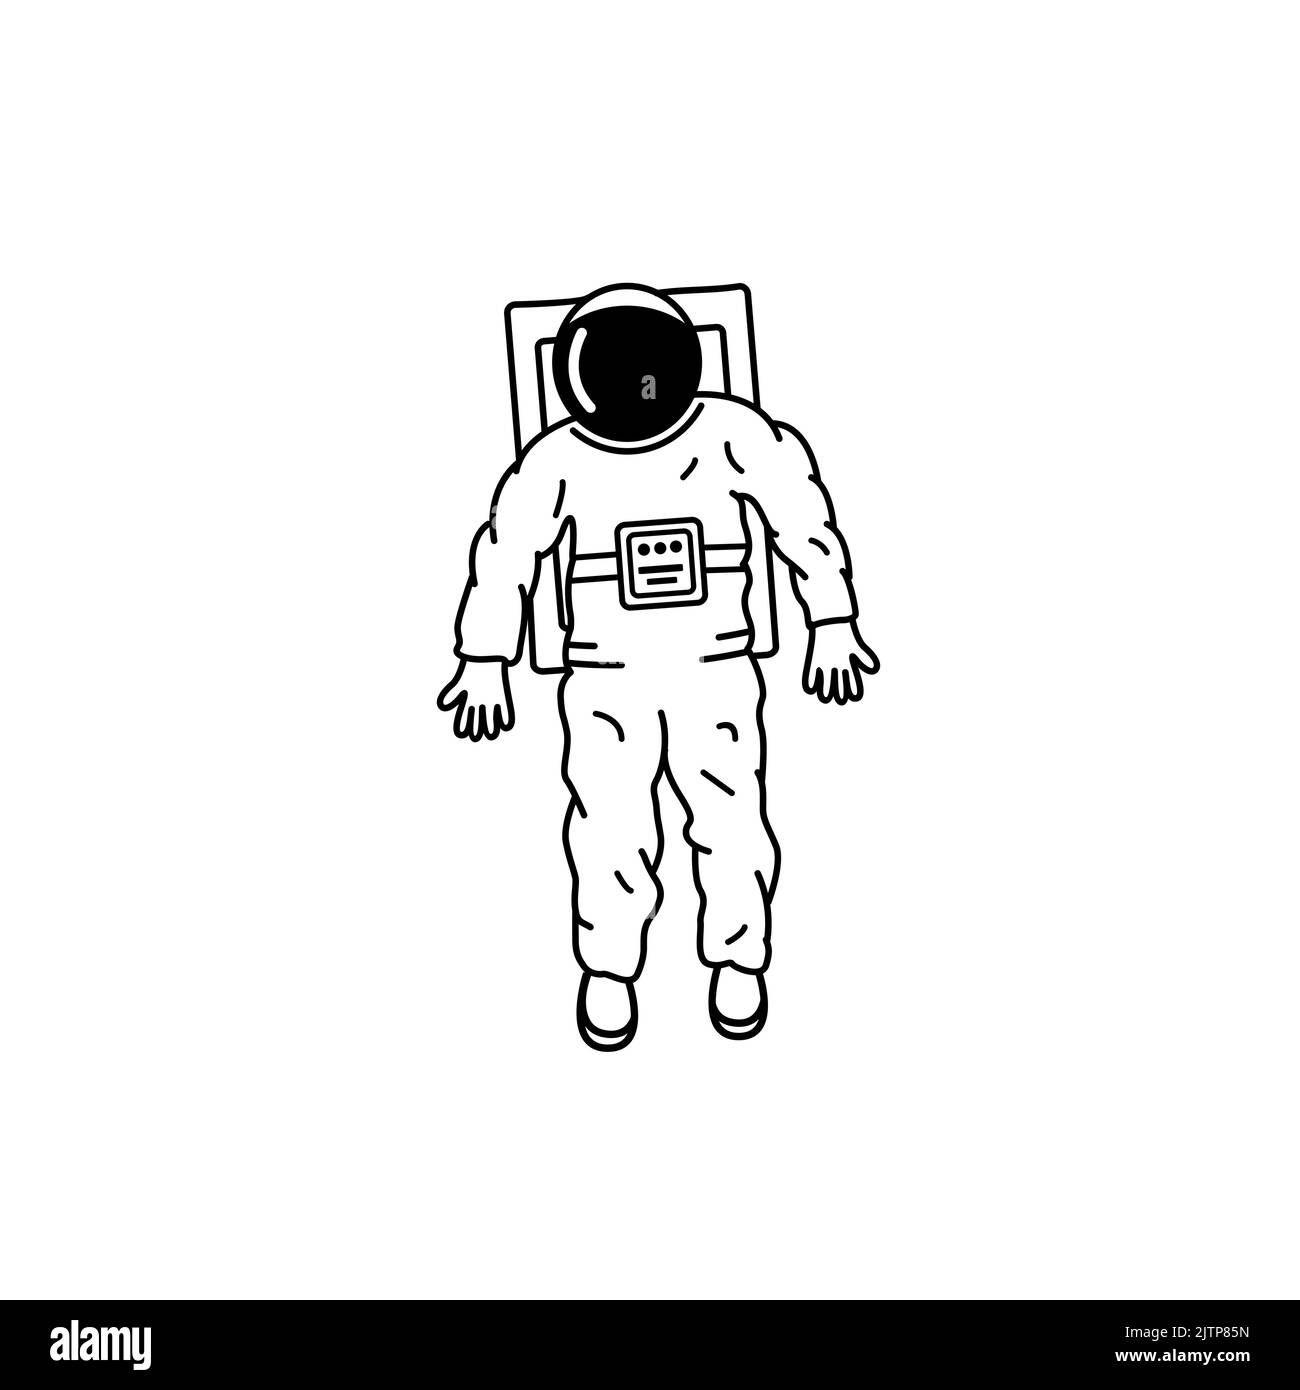 Cartoon astronaut Black and White Stock Photos & Images - Alamy